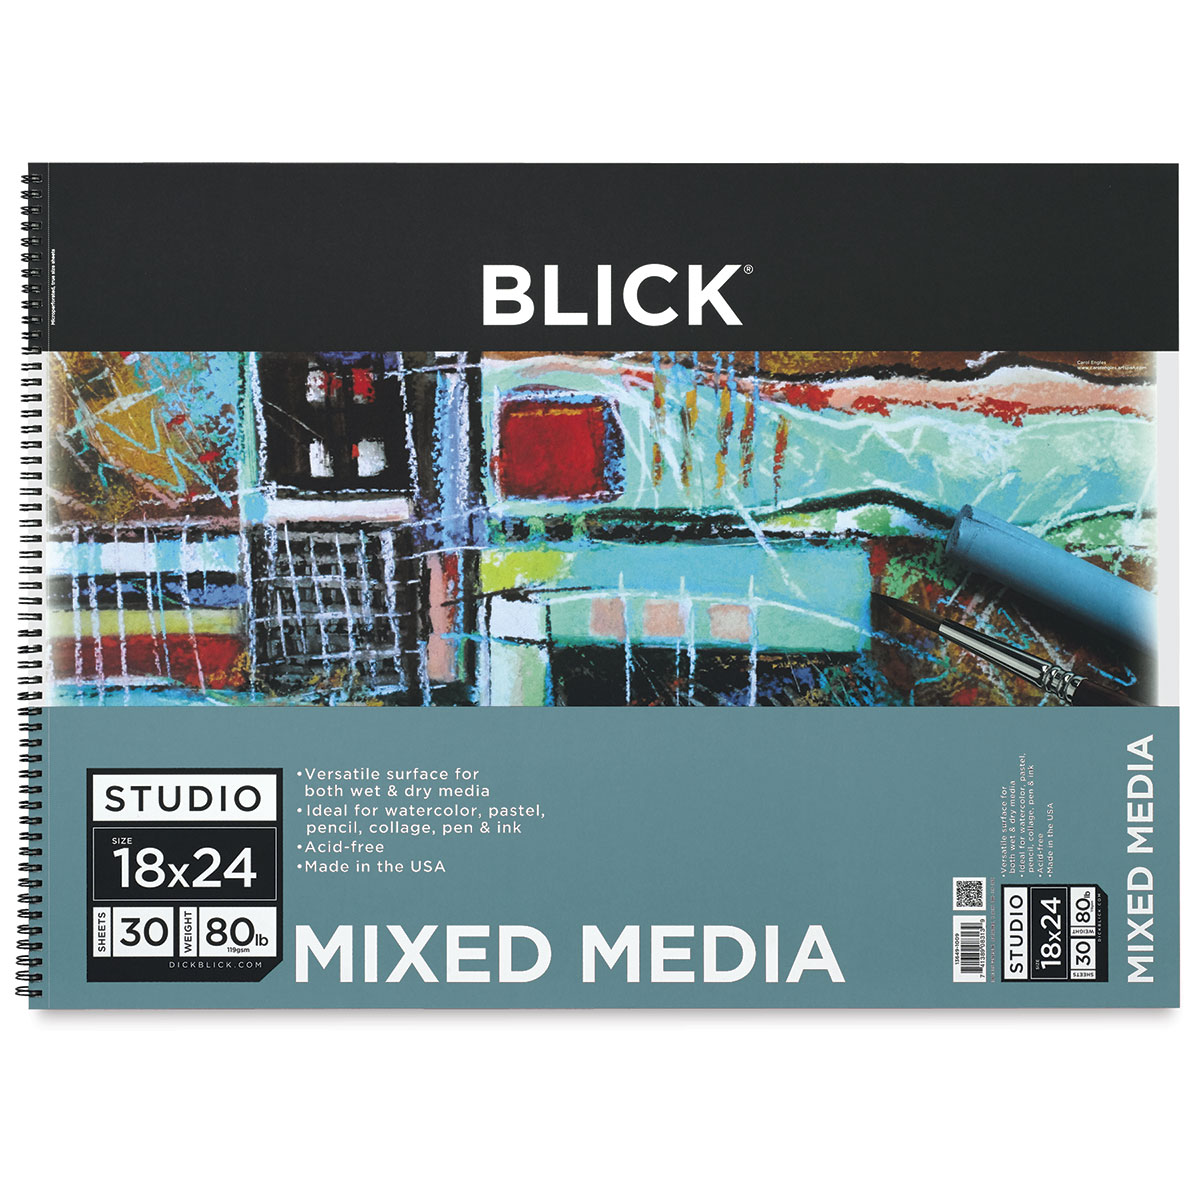 Blick Studio Newsprint Pad - 18 x 24, 100 Sheets